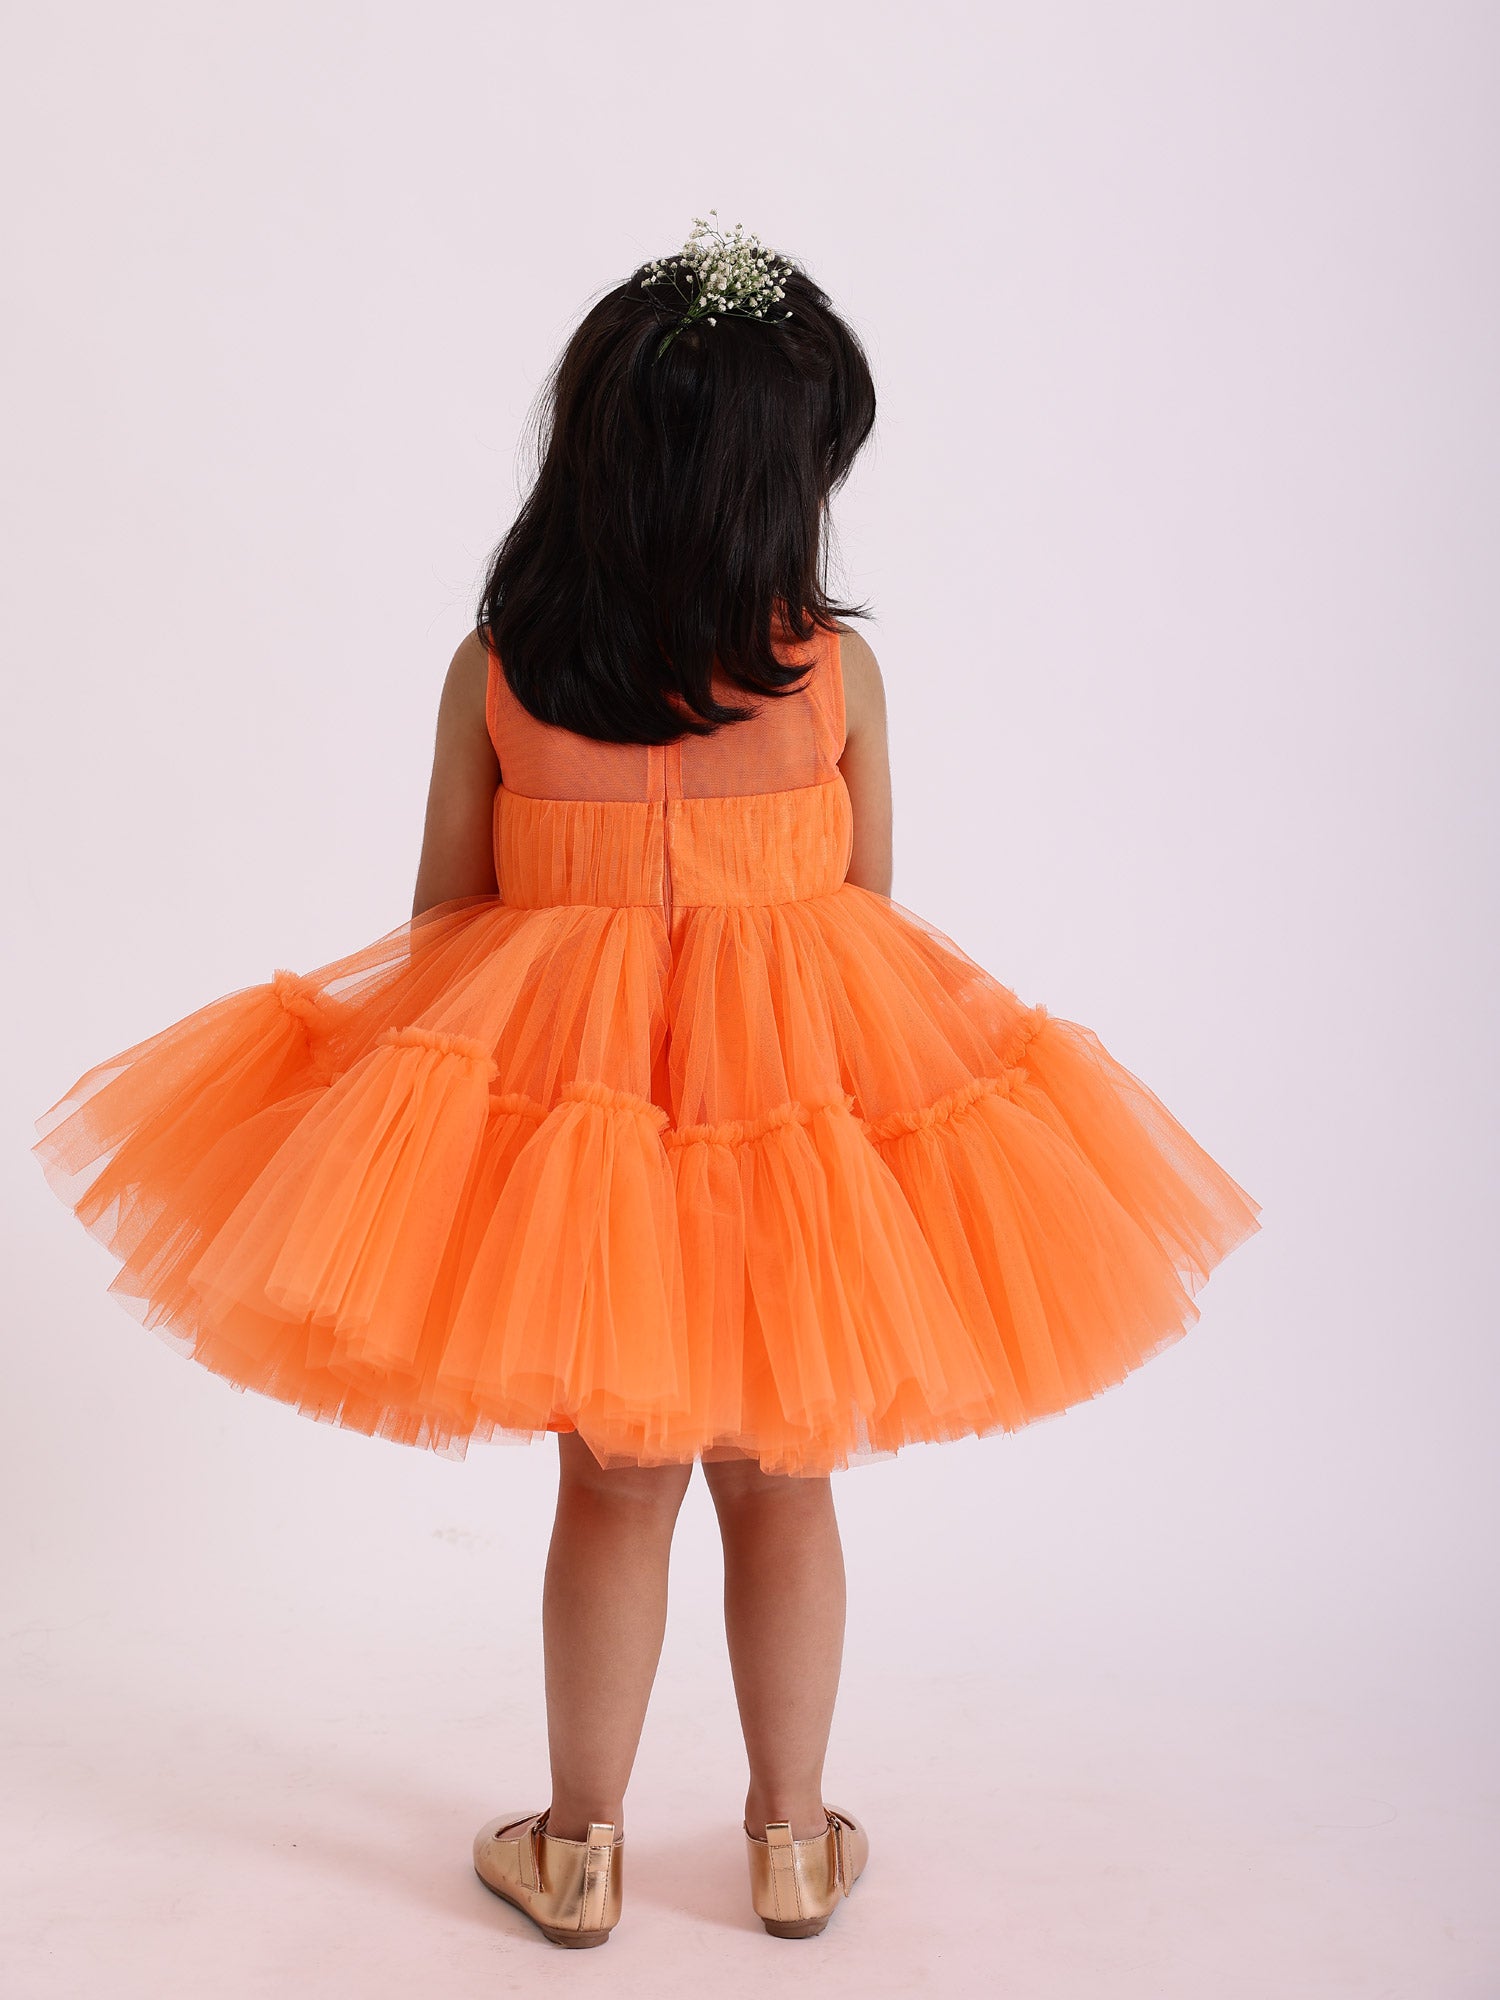 JANYAS CLOSET Embellished Orange Party Flower Girl Dress With Hair Pin*